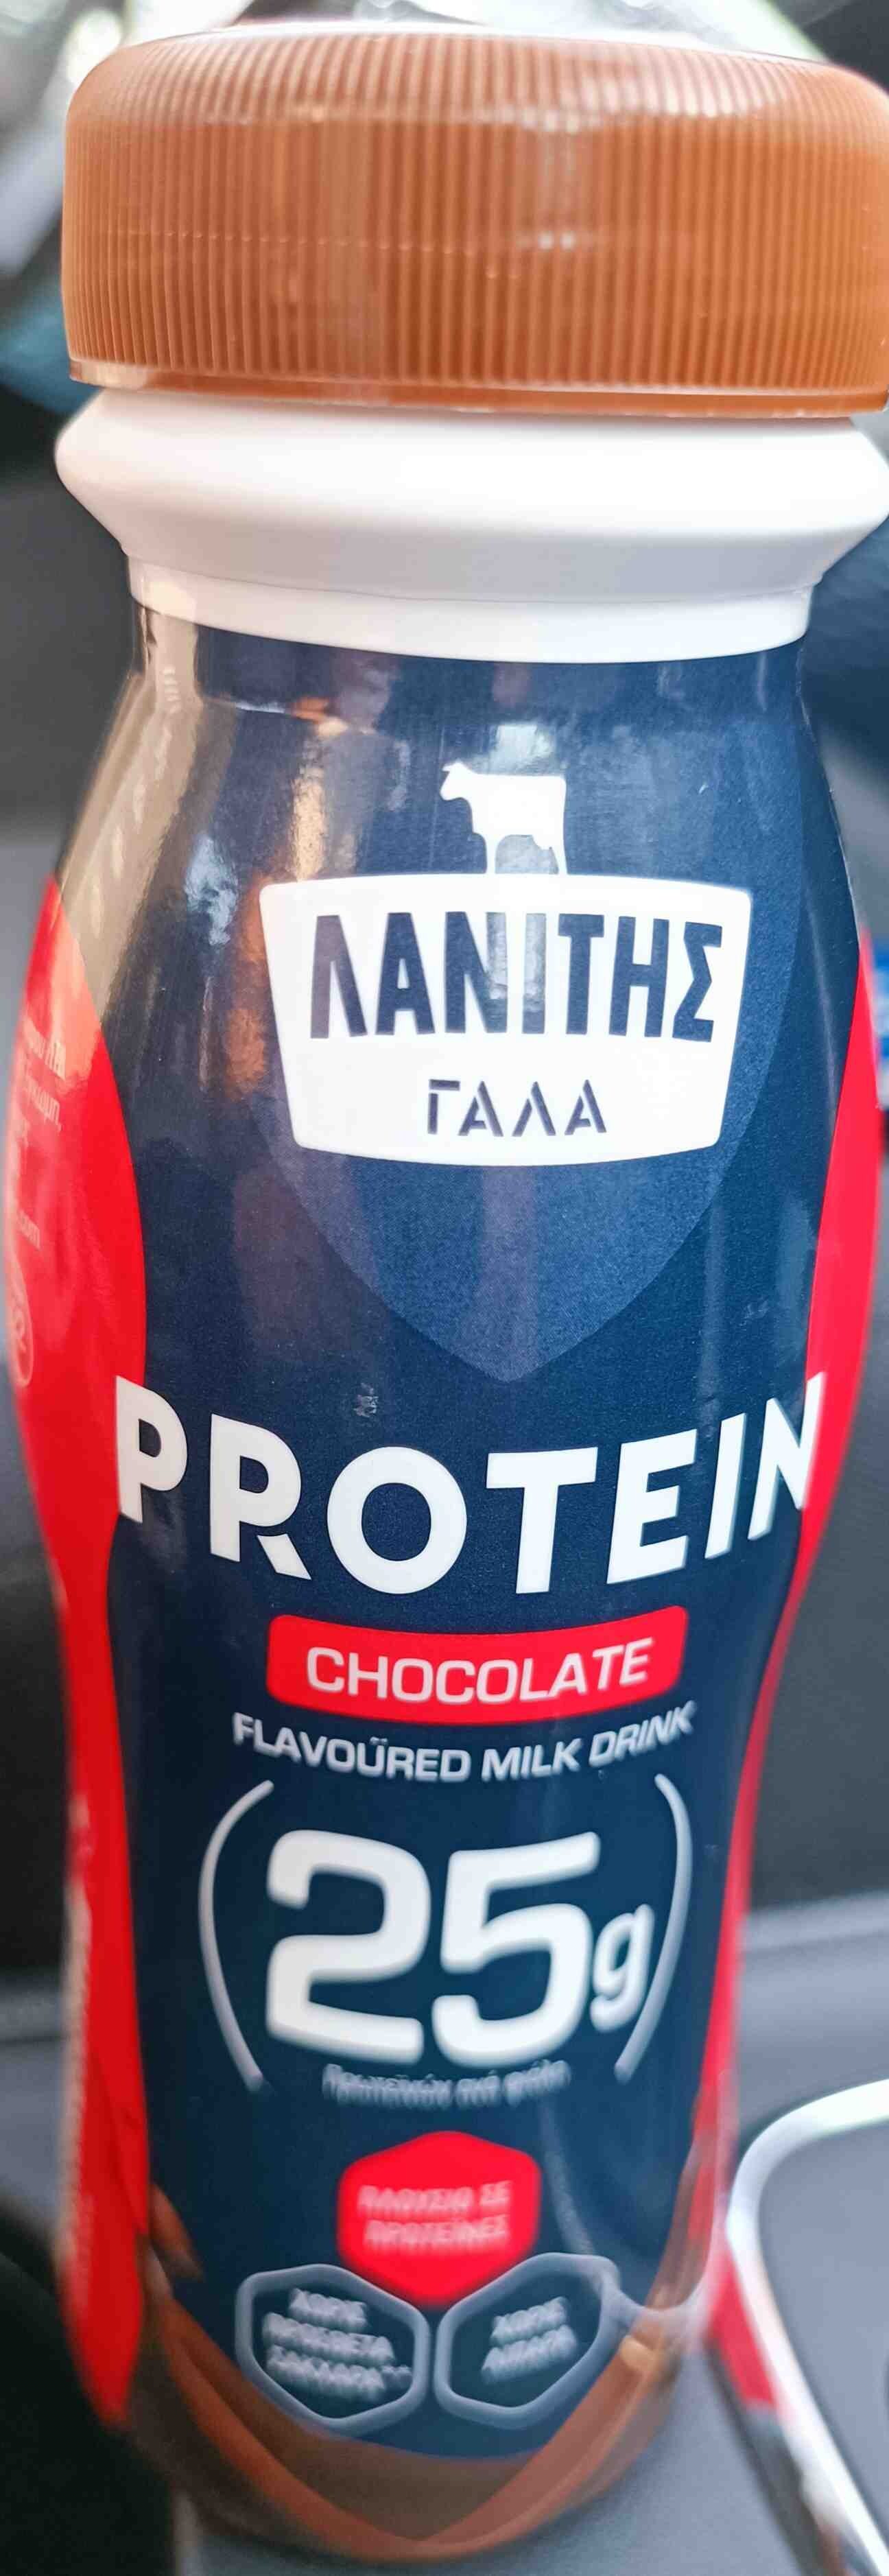 Protein Chocolate Flavoured Milk Drink - Product - el